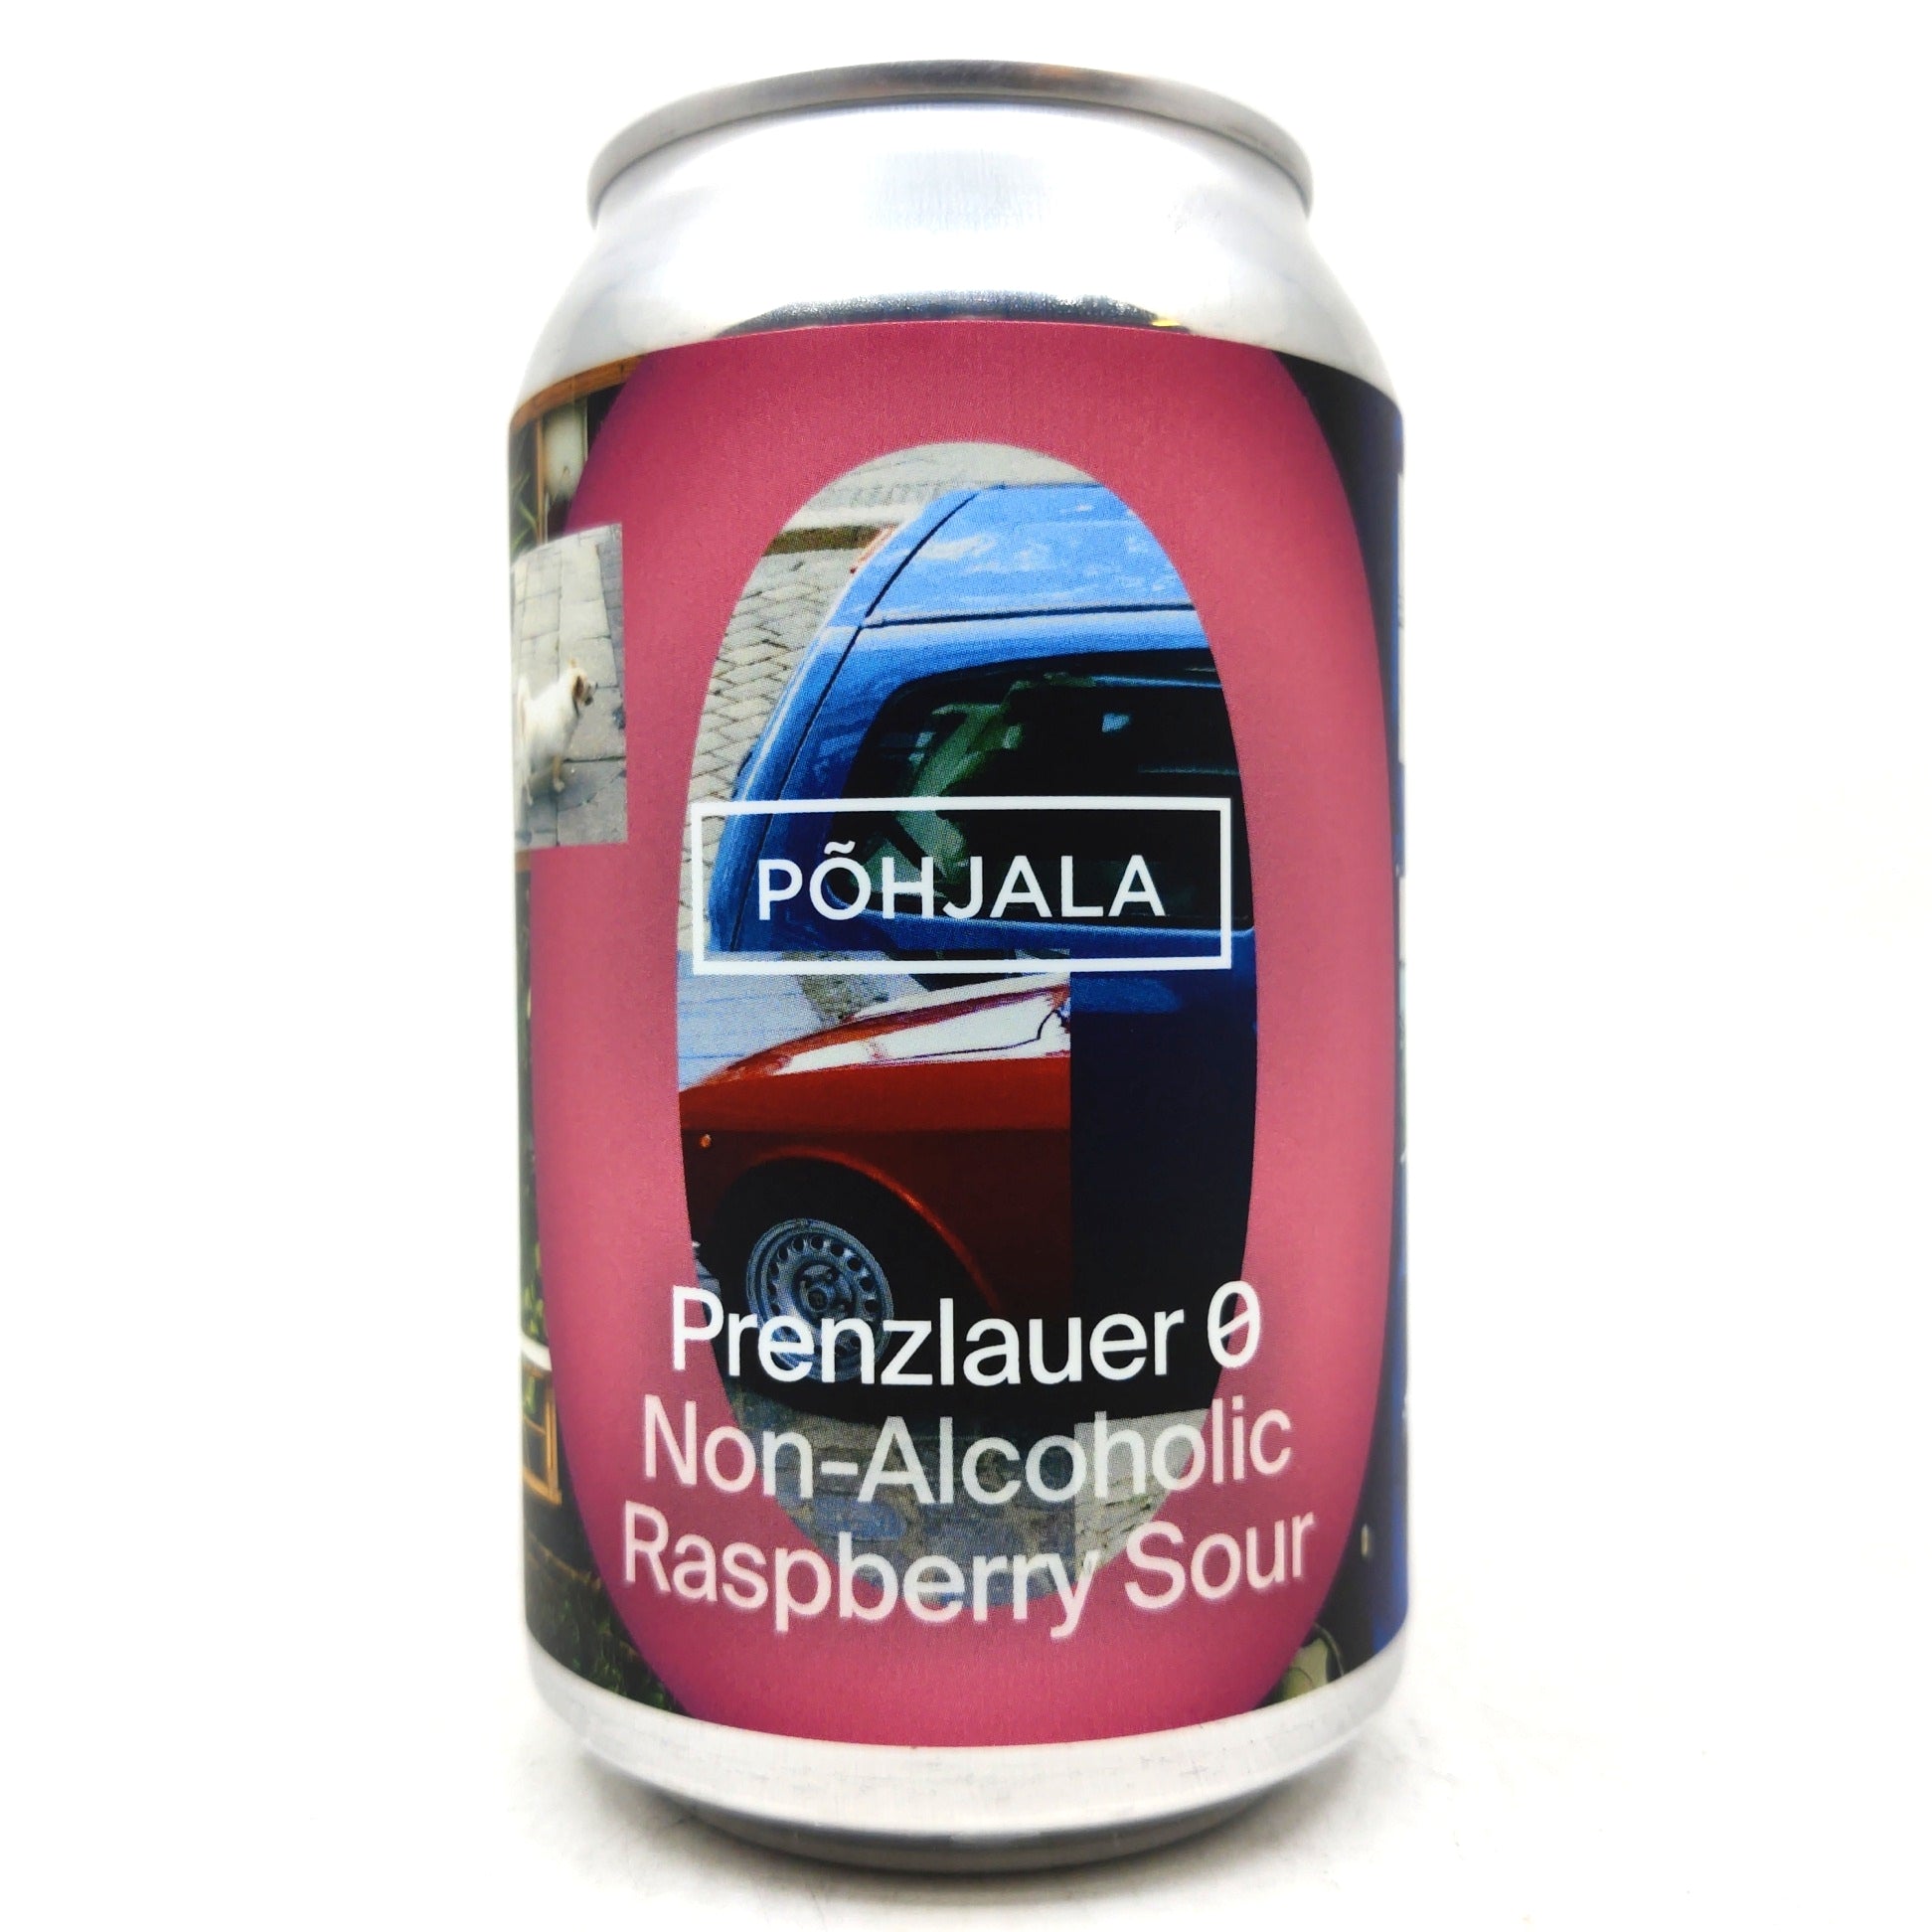 Pohjala Prenzlauer Non-Alcoholic Raspberry Sour 0.5% (330ml can)-Hop Burns & Black